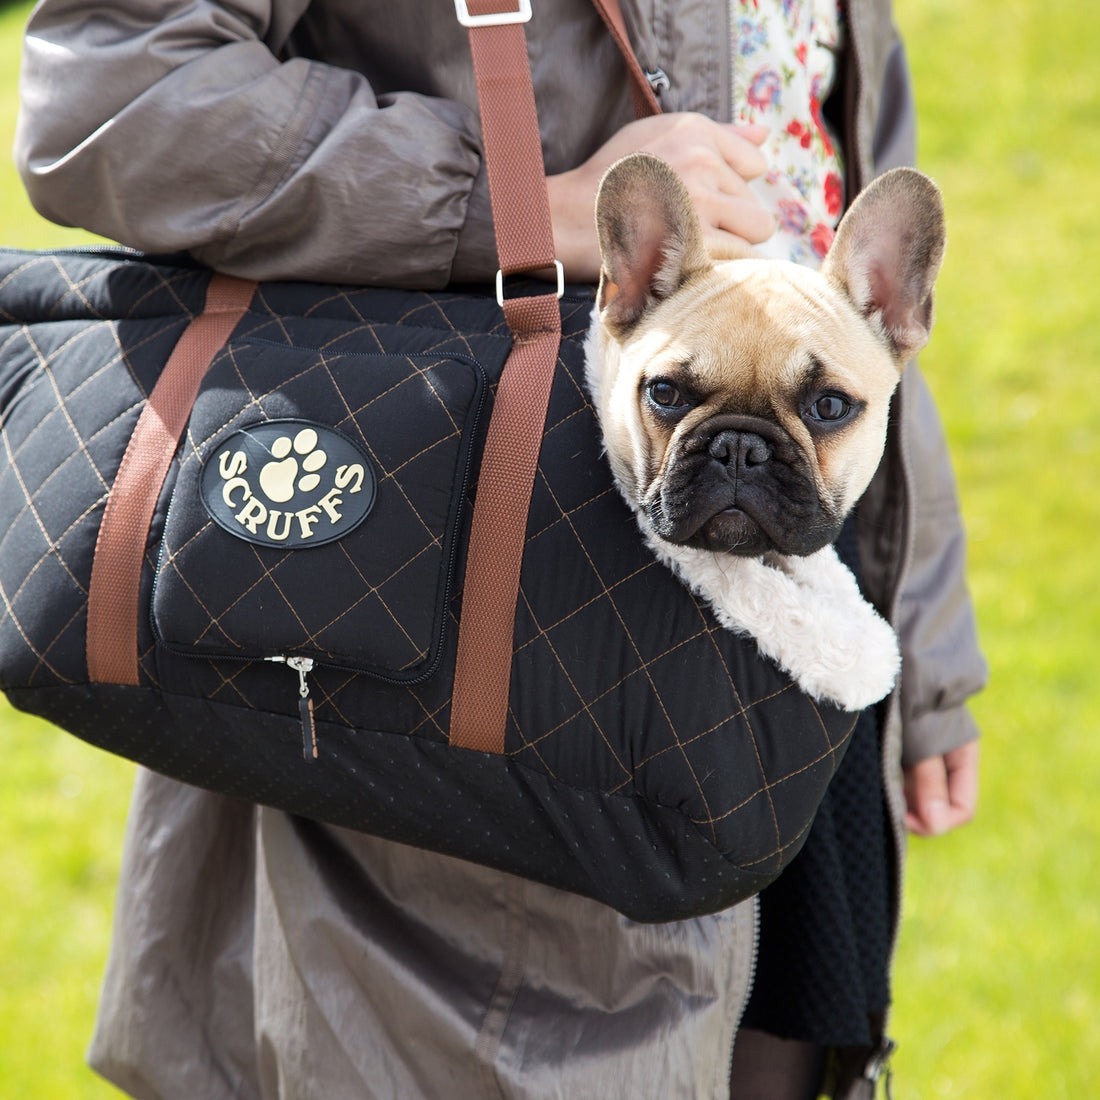 Dog Travel Accessories